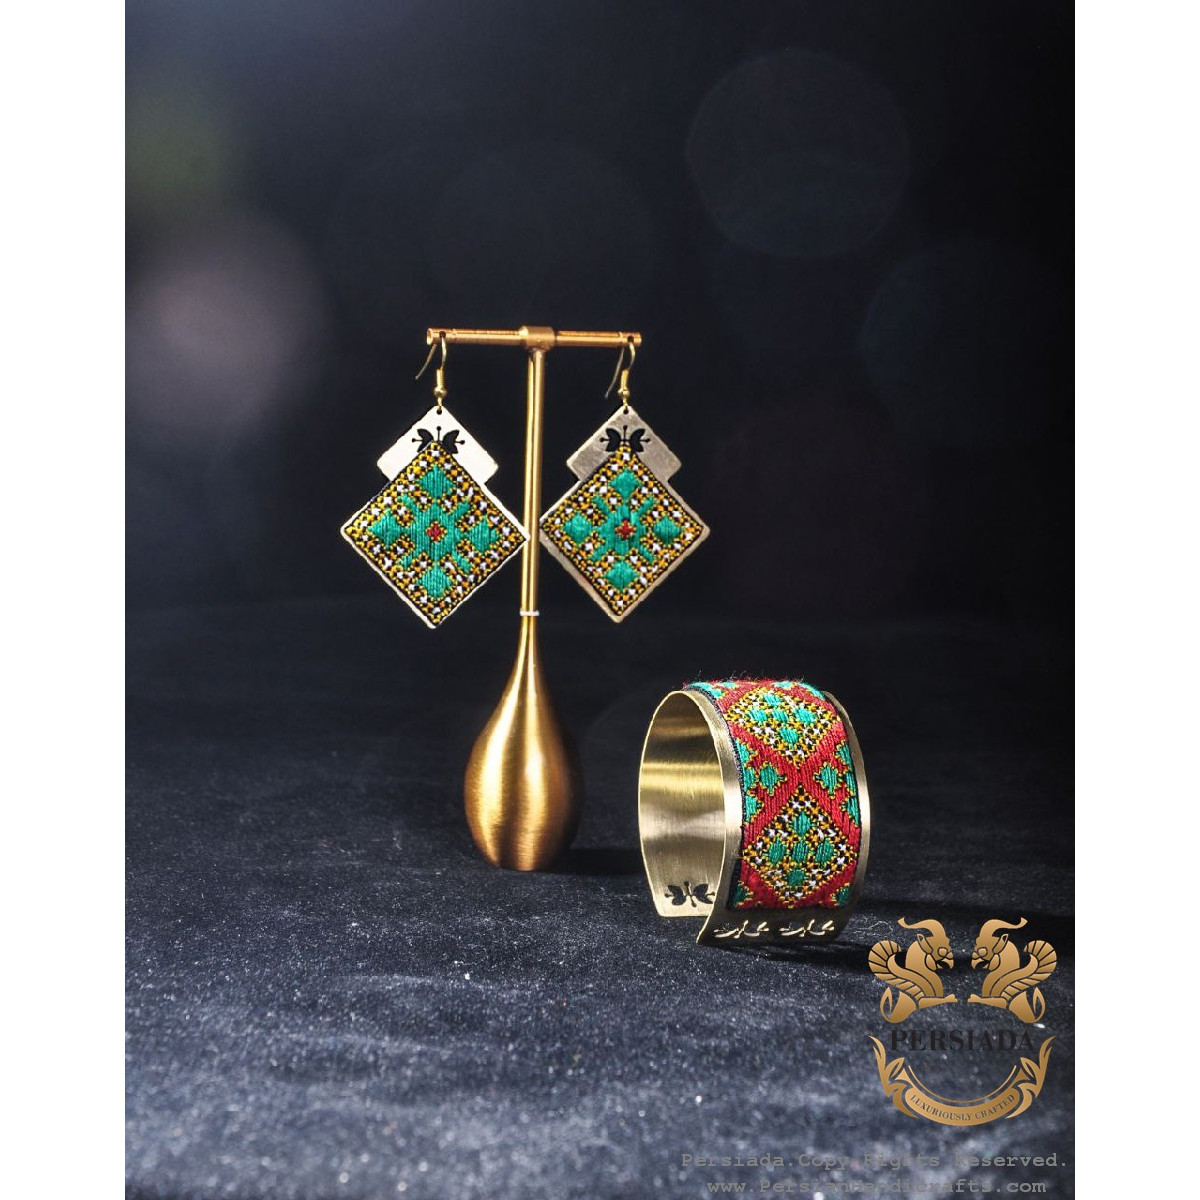 Brass  Bracelet Earrings Set | Balouch Needlework | PHW2001-Persiada Persian Handicrafts